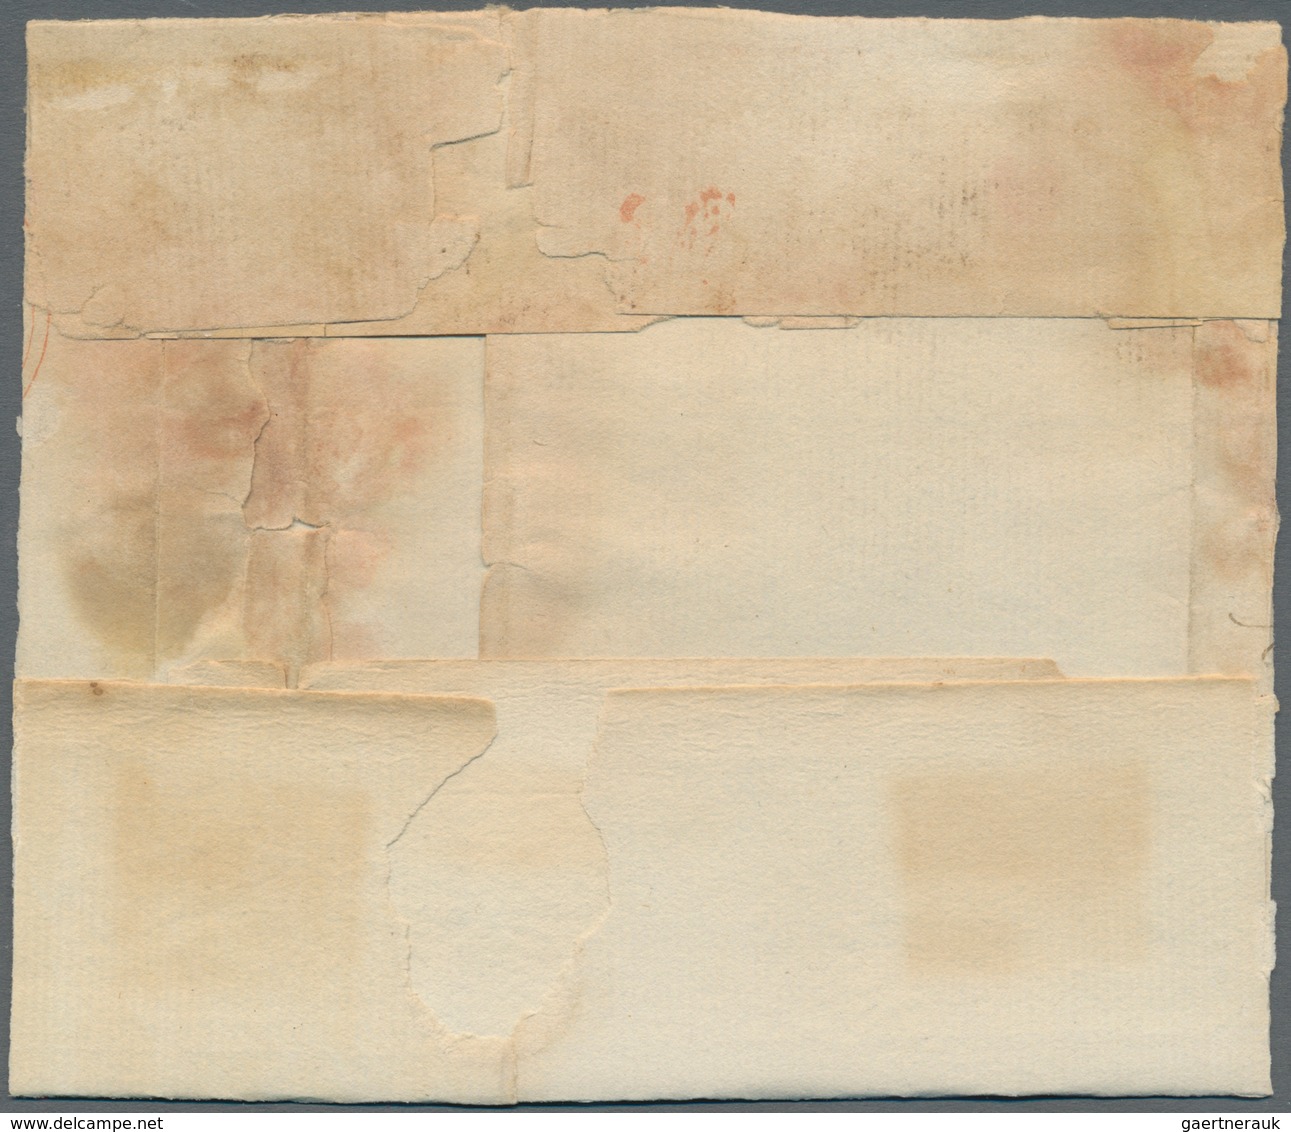 Neubraunschweig: 1798, Incoming Letter Bearing Red "FREE" Mark From London 7 Febr. 1798, Addressed T - Brieven En Documenten